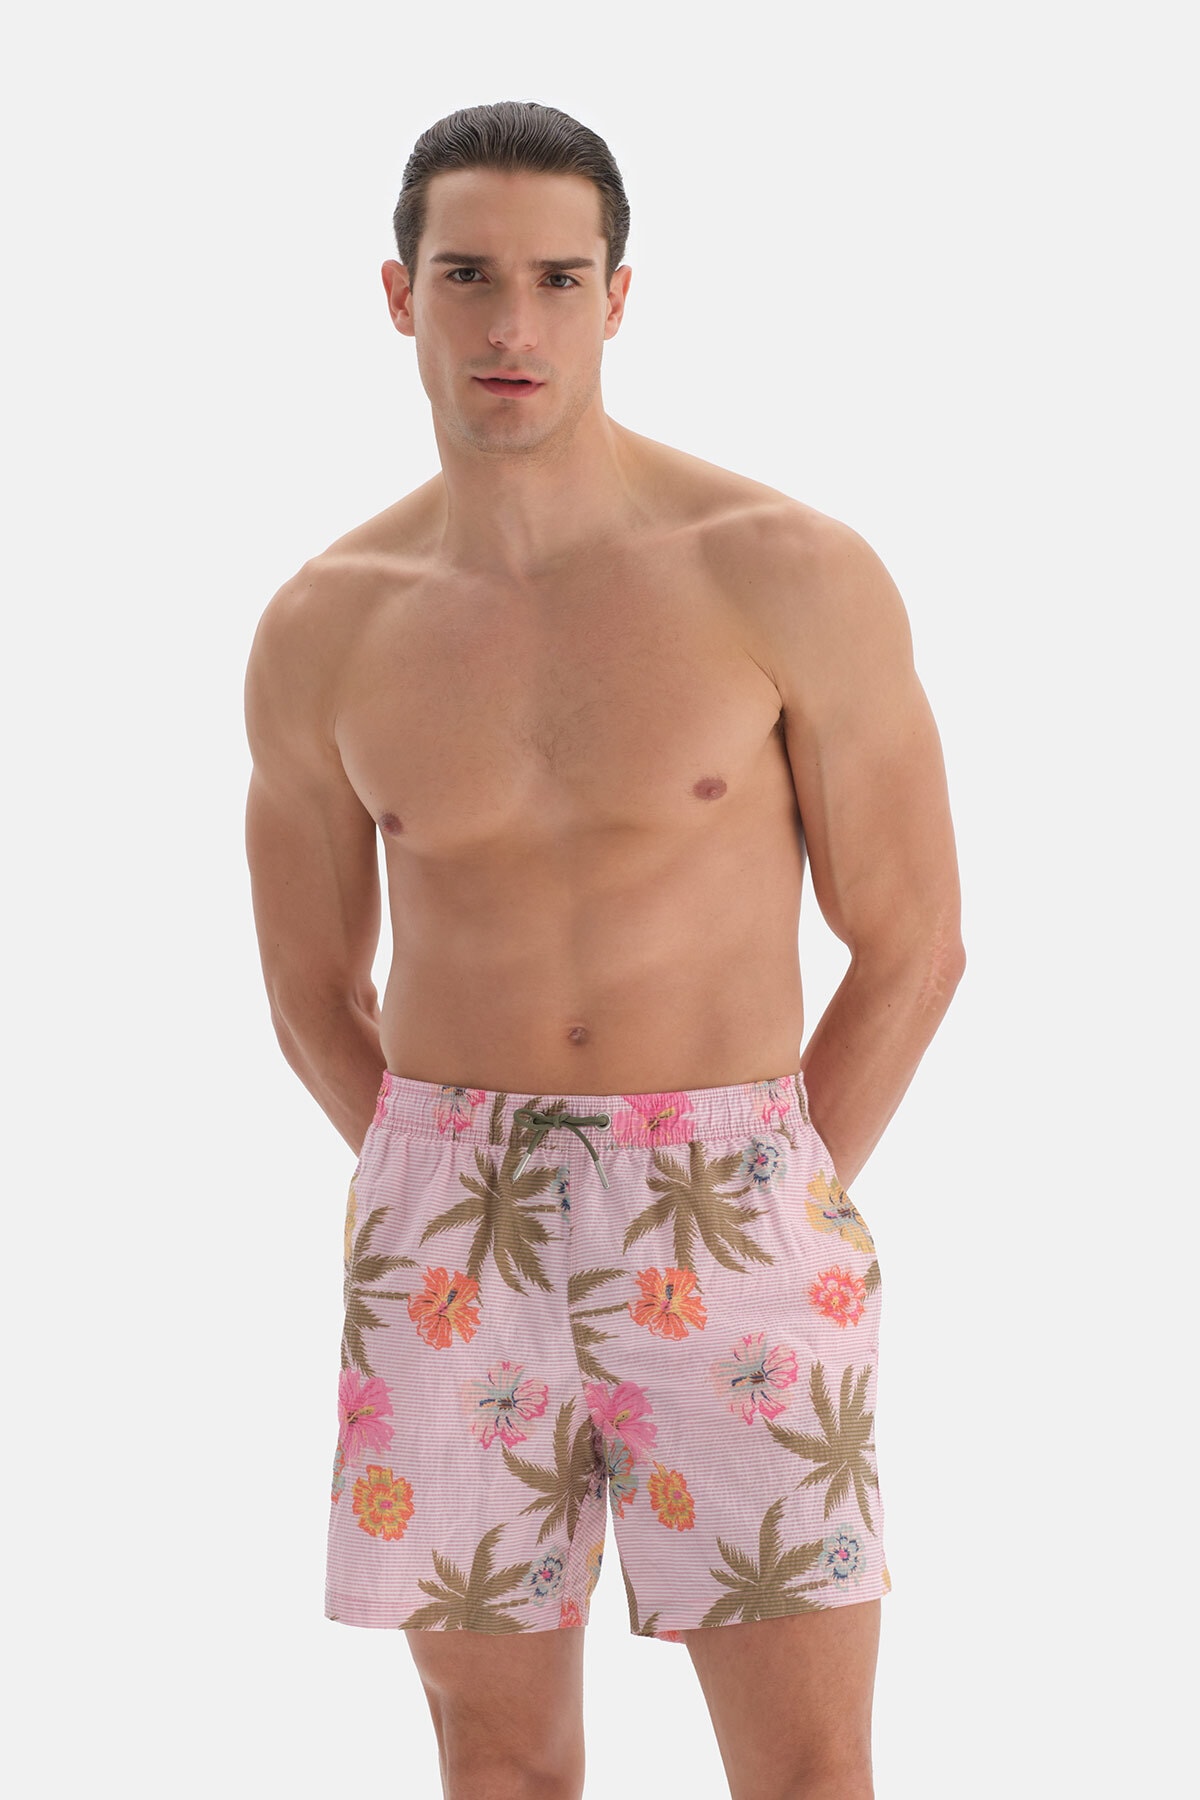 Dagi Pink Striped Flower Design. Medium Shorts